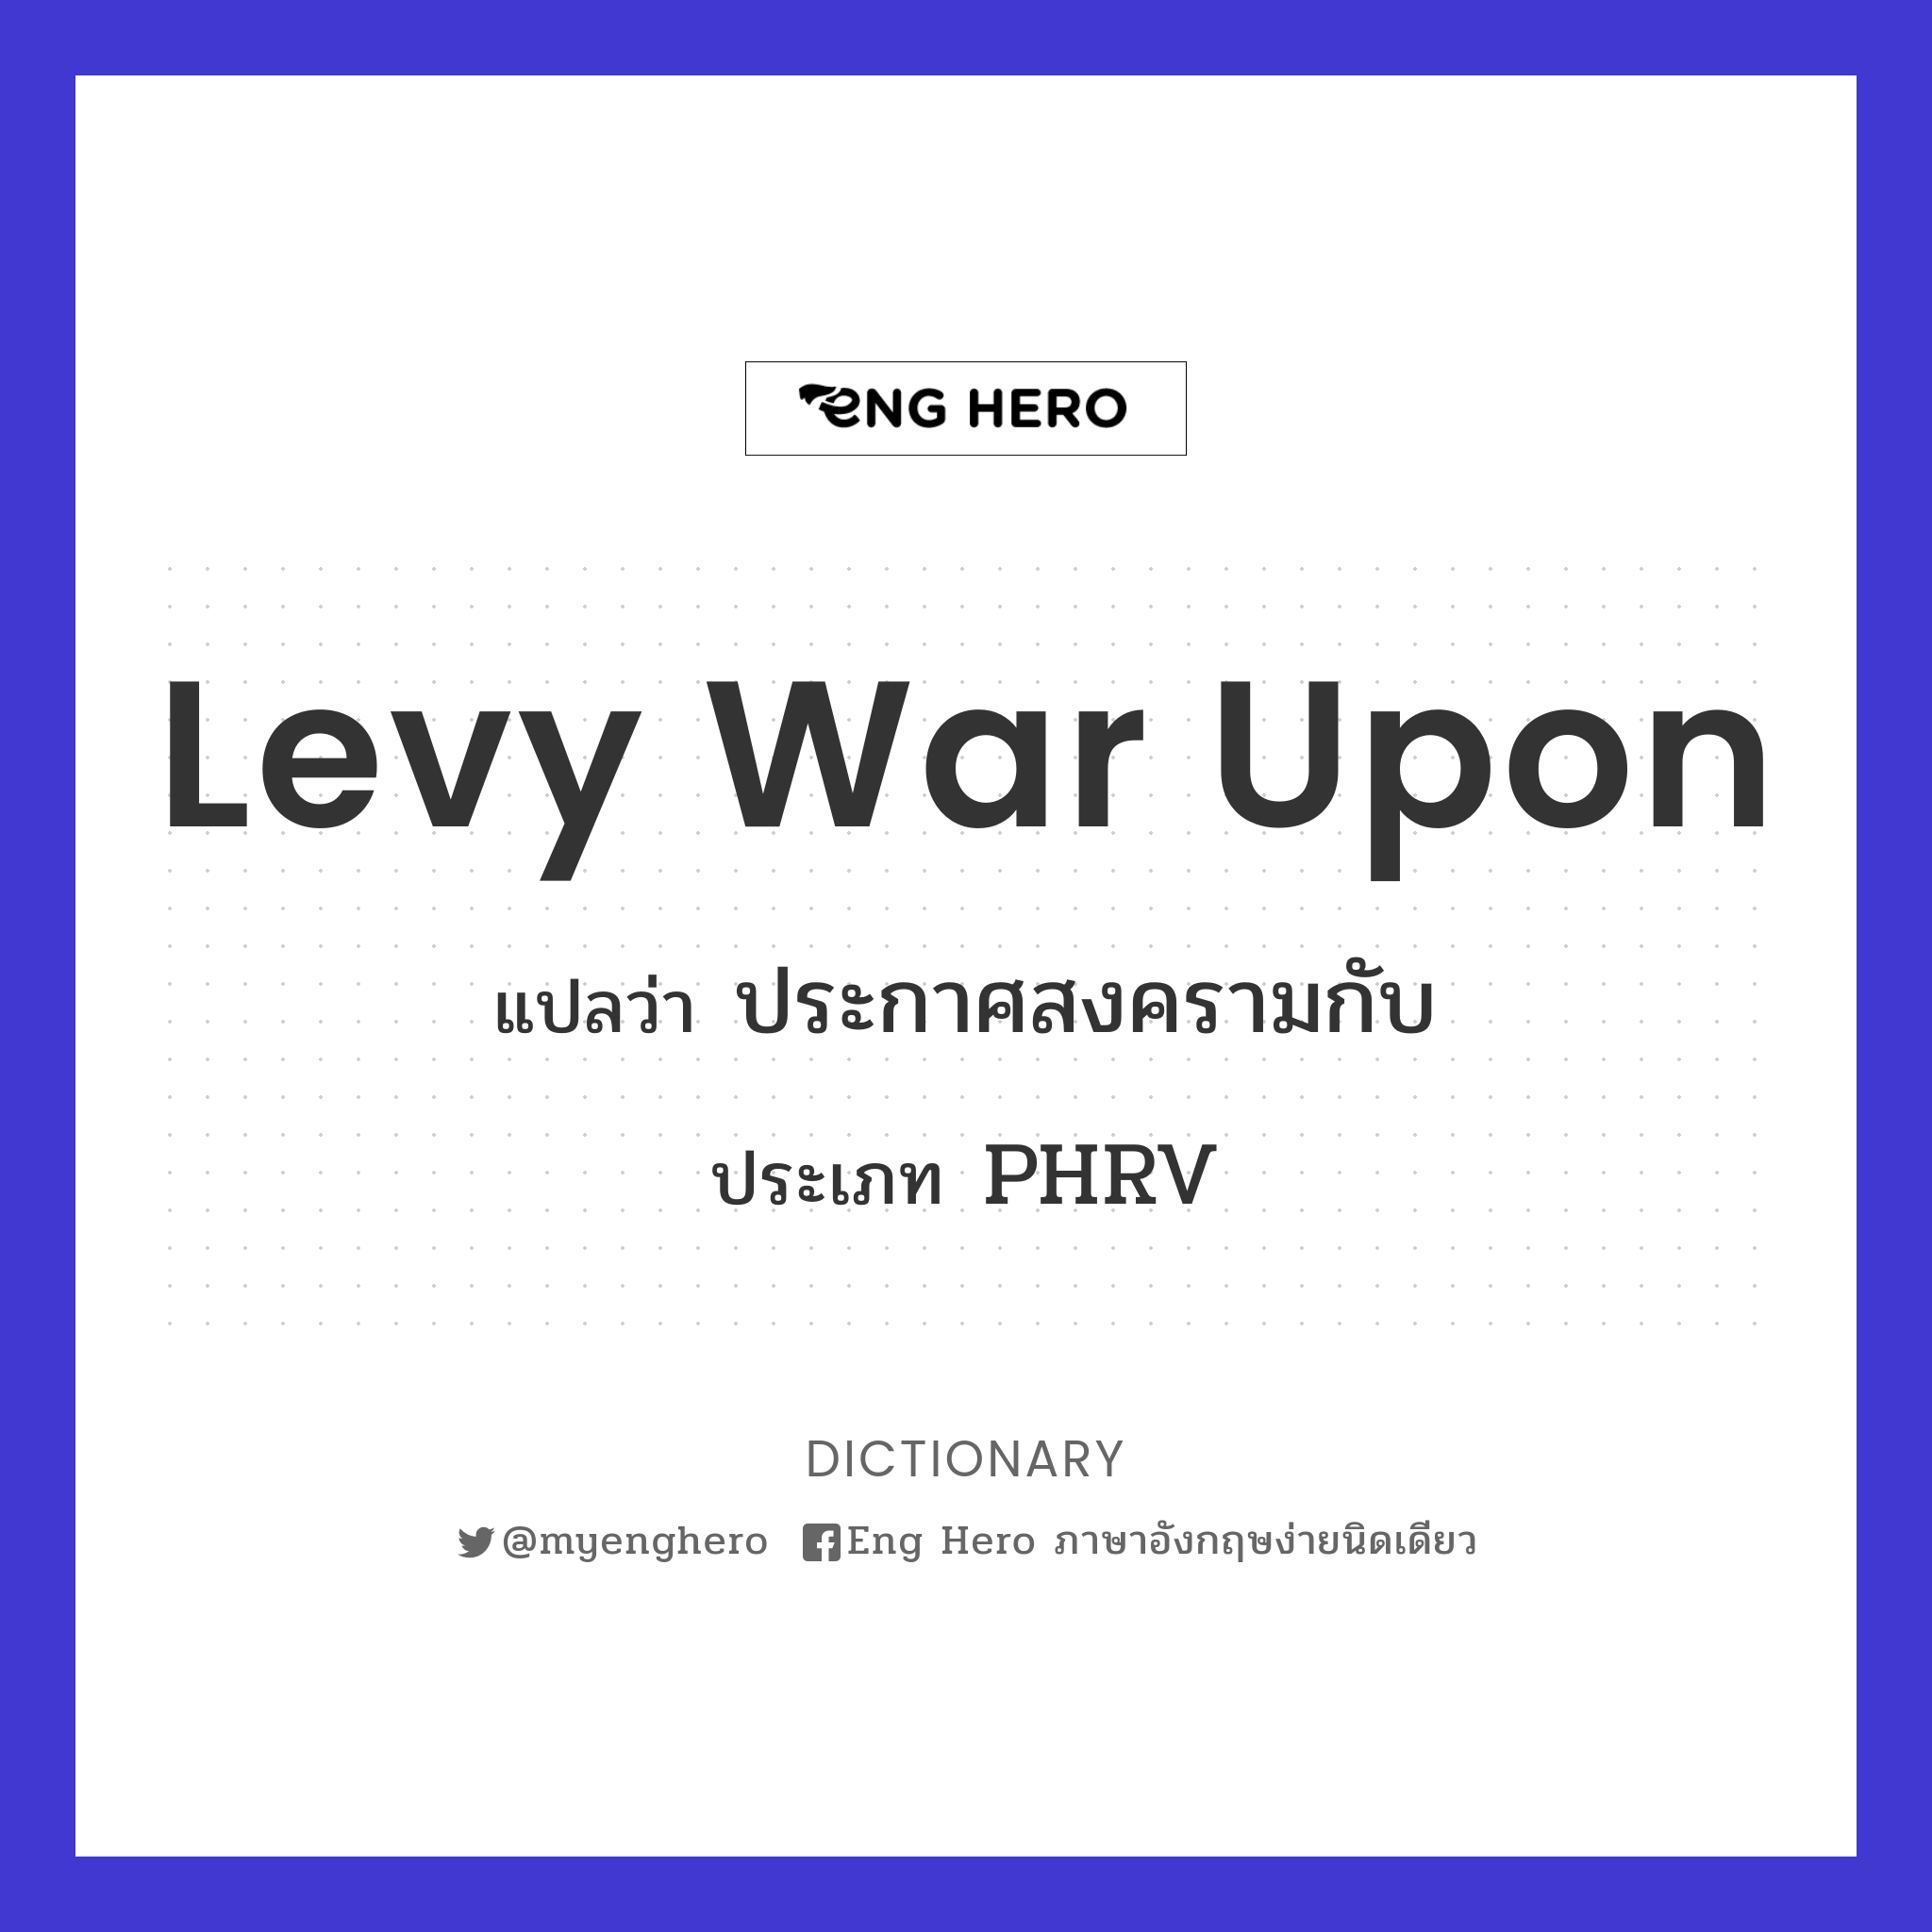 levy war upon